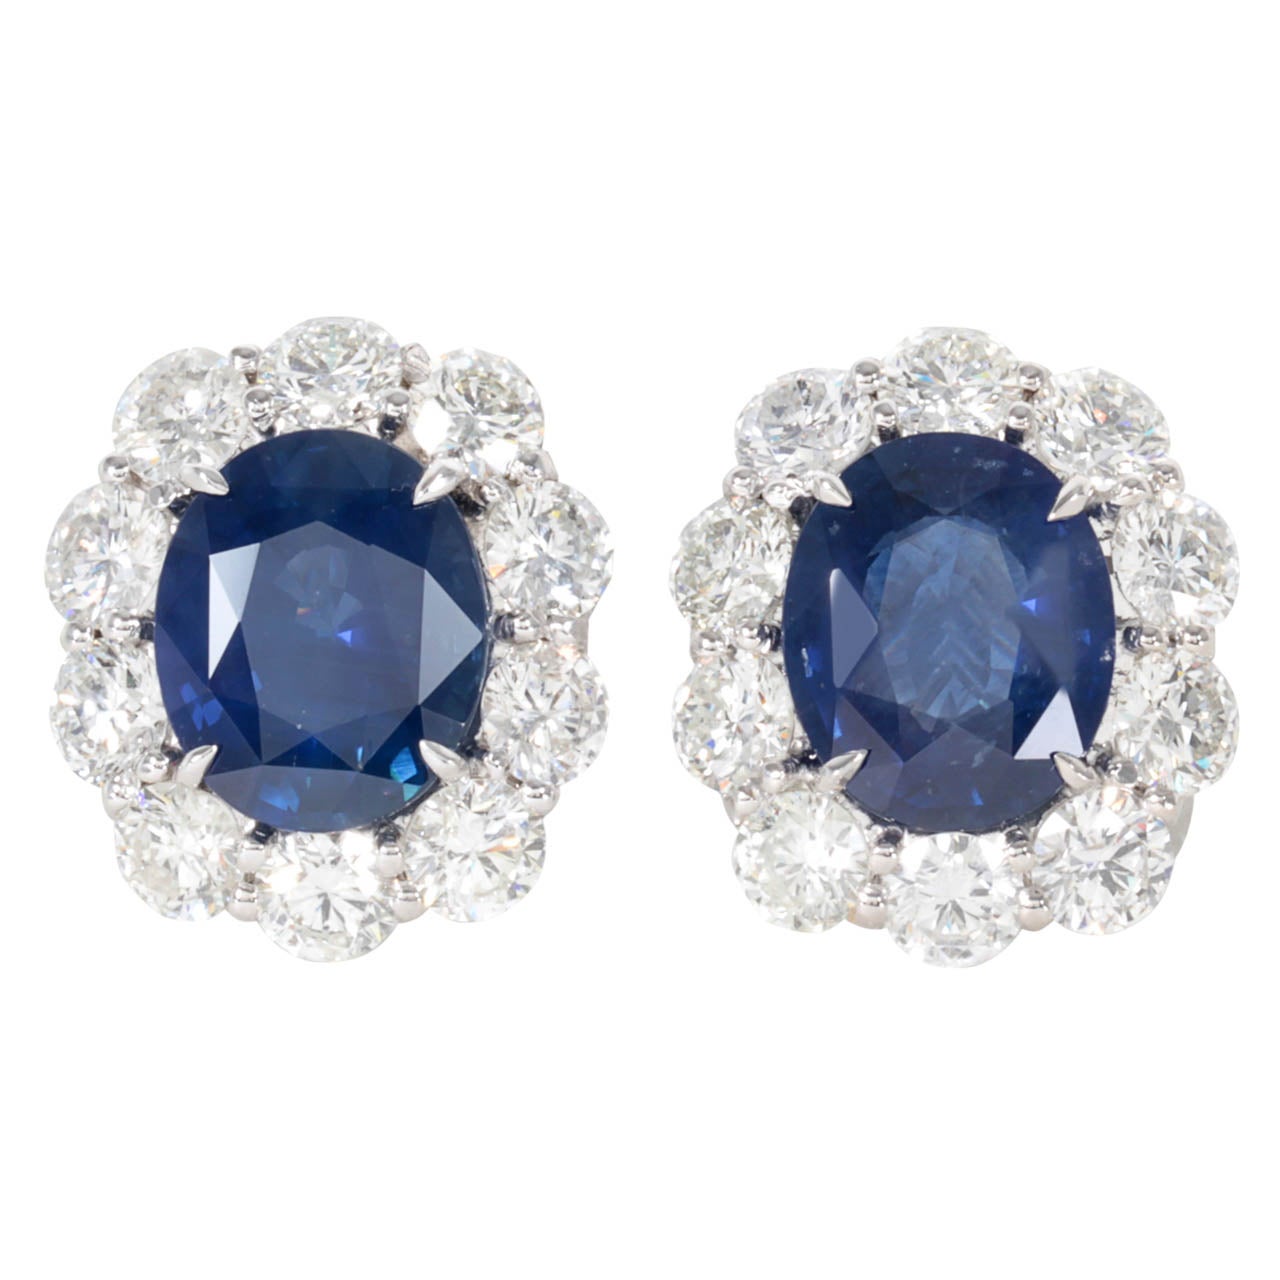 Exquisite Ceylon Sapphire Diamond Gold Earrings